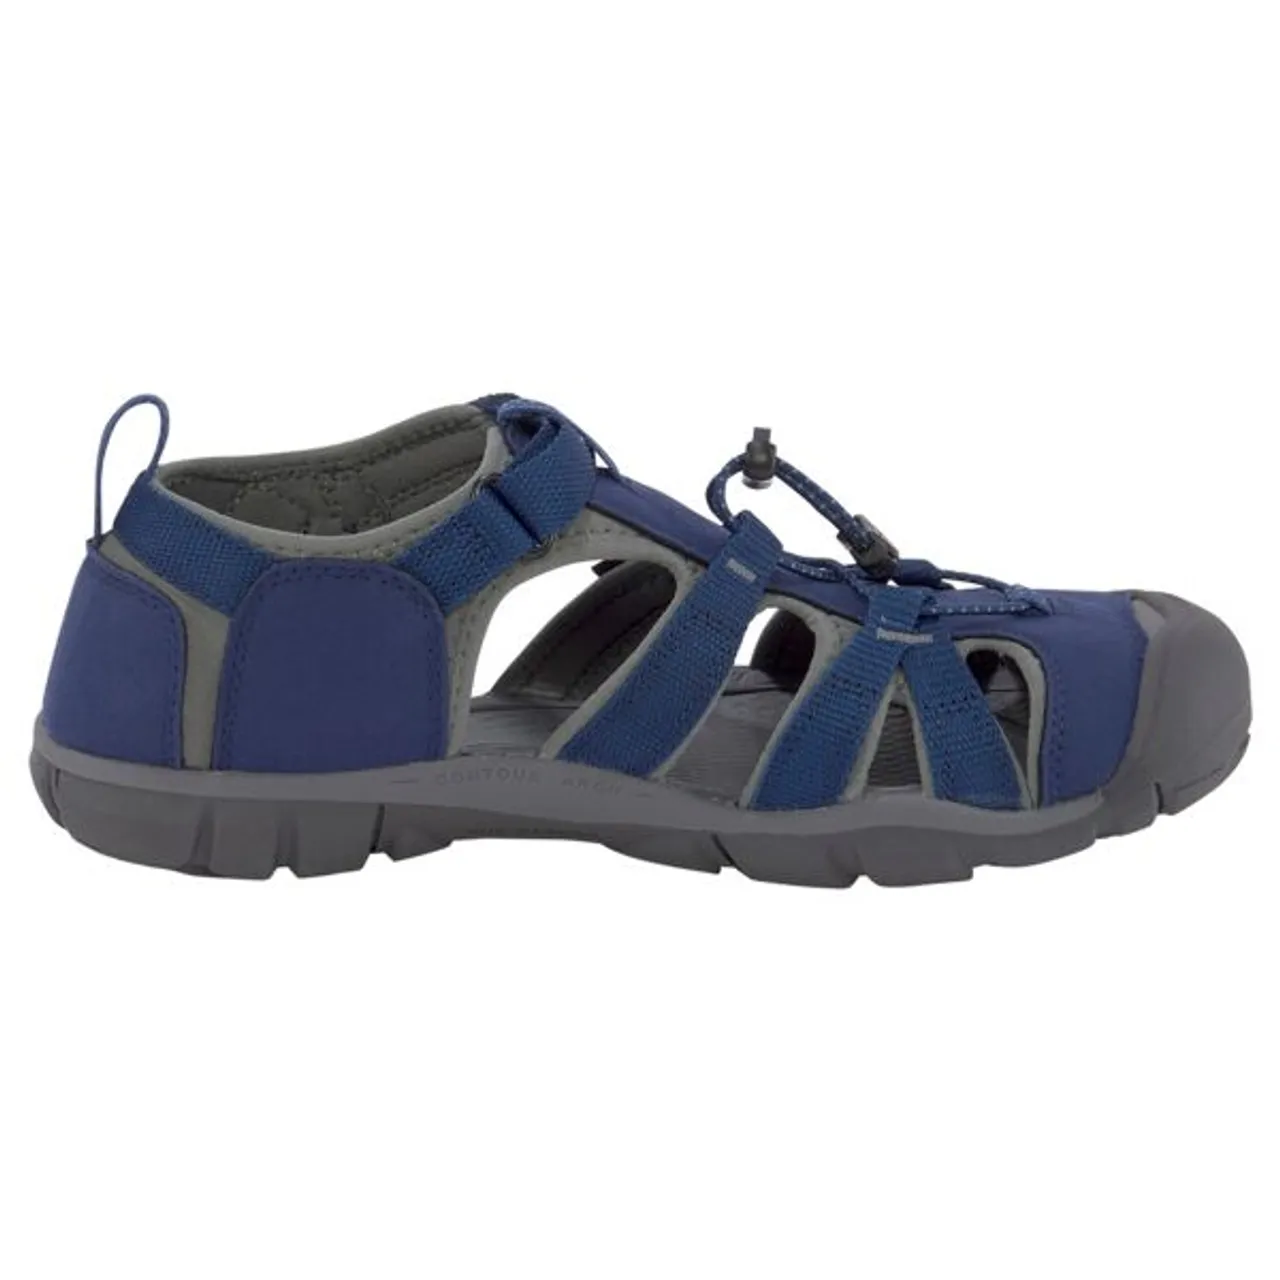 Sandale KEEN "SEACAMP II CNX" Gr. 38, blau (marine, grau) Schuhe